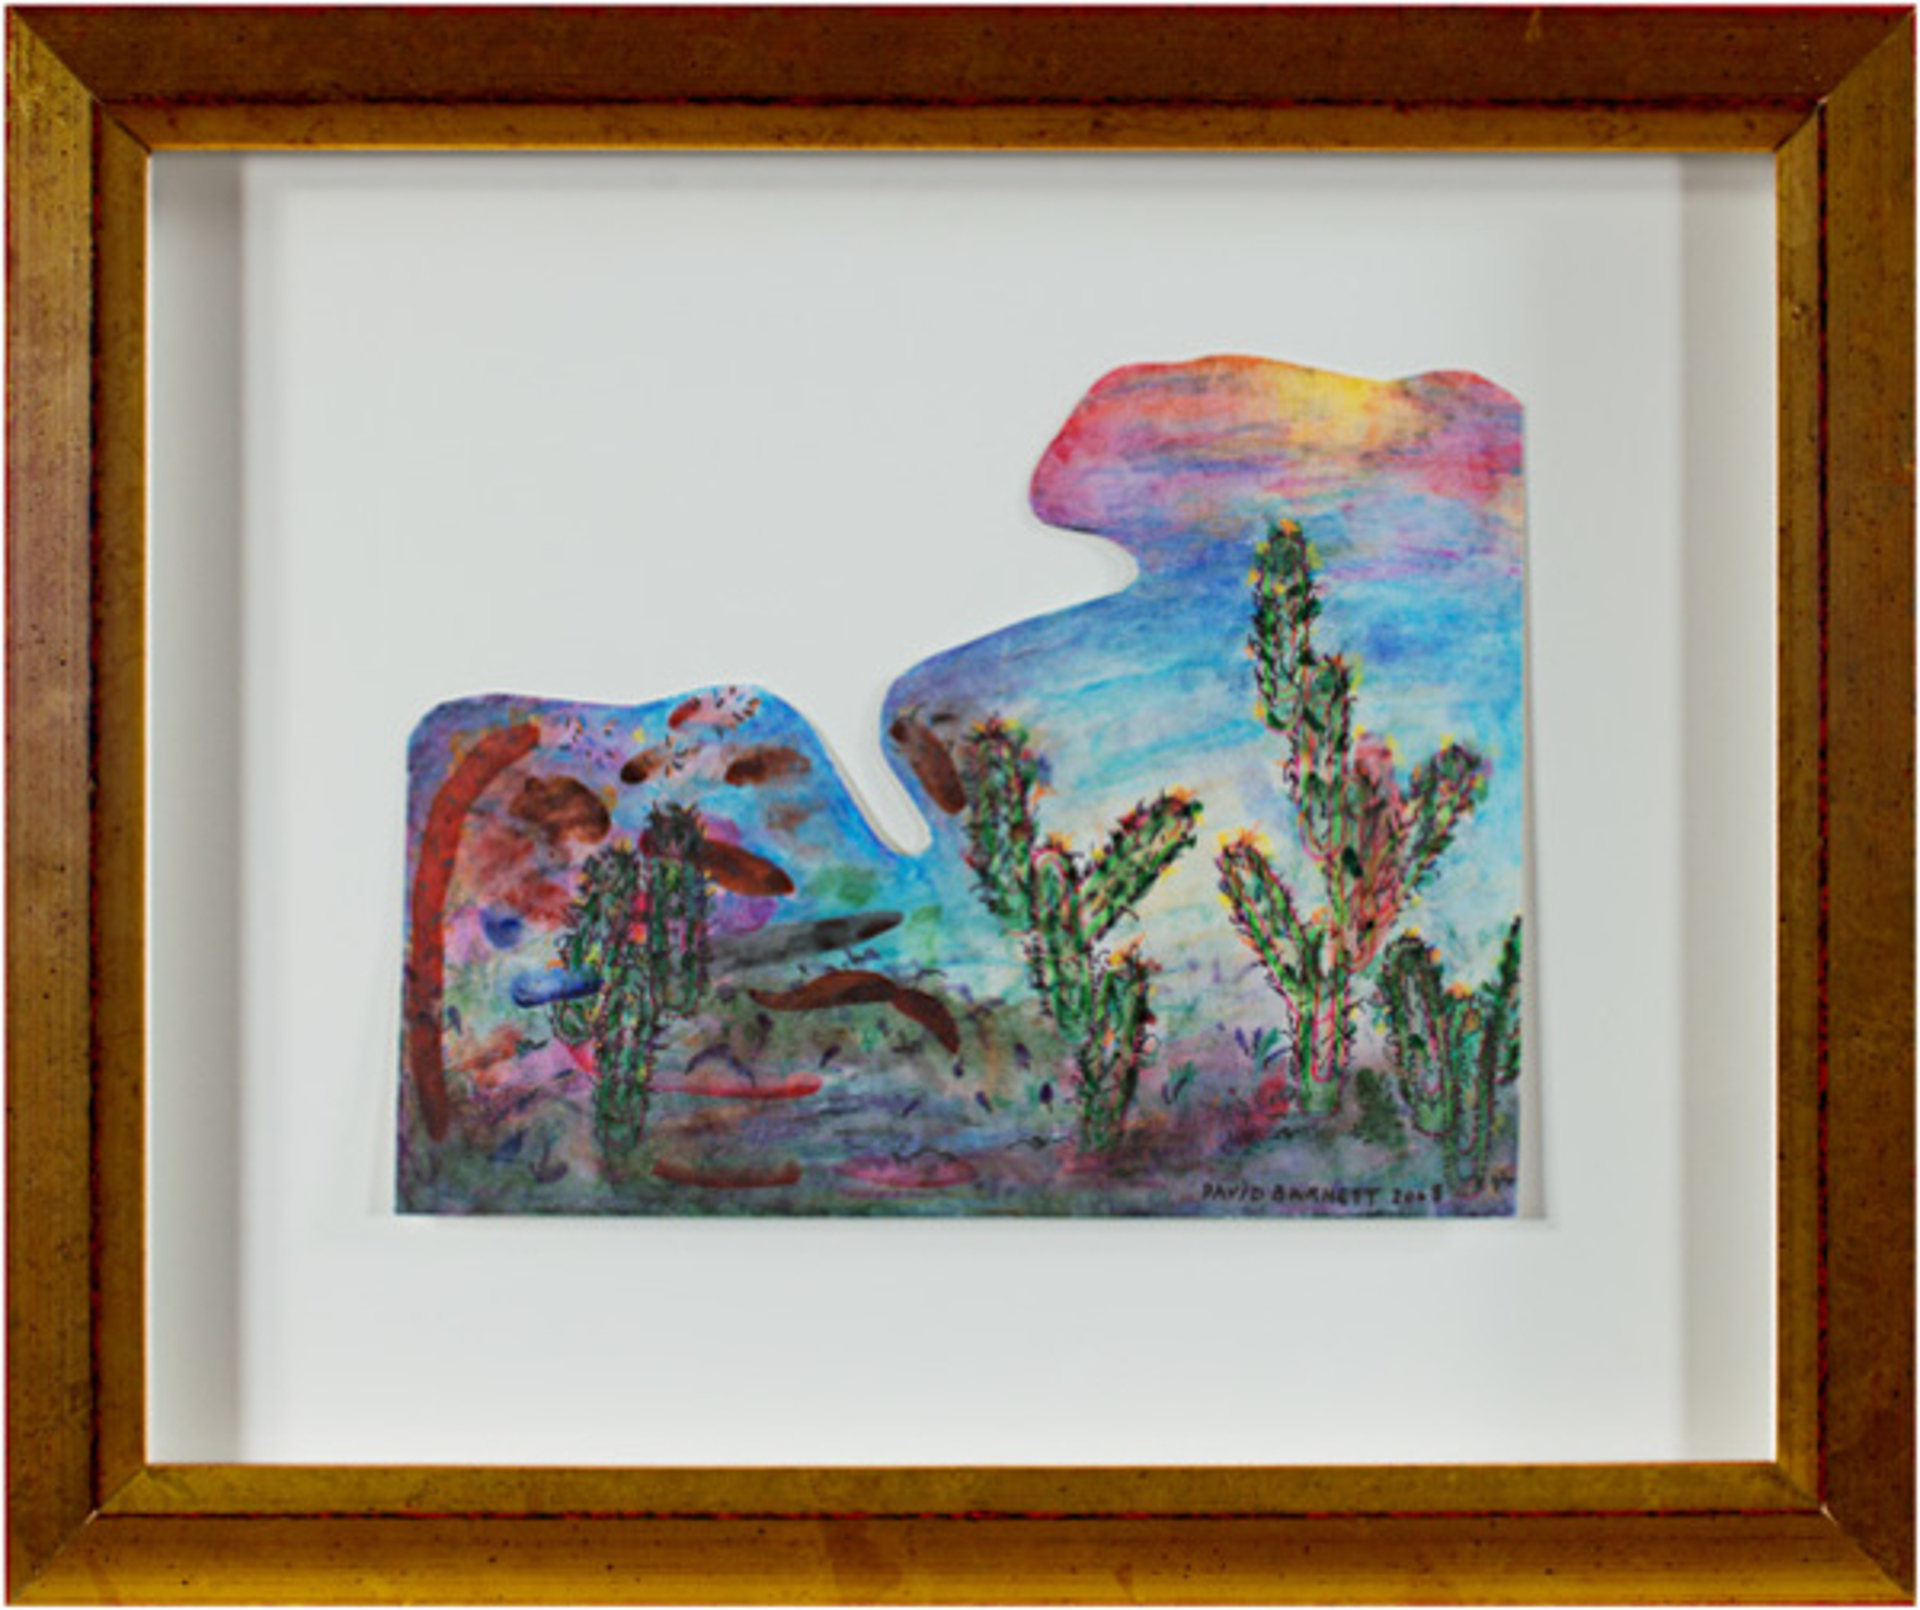 Southwest Series:  Paper Clip Cactus Artist's Palette by David Barnett